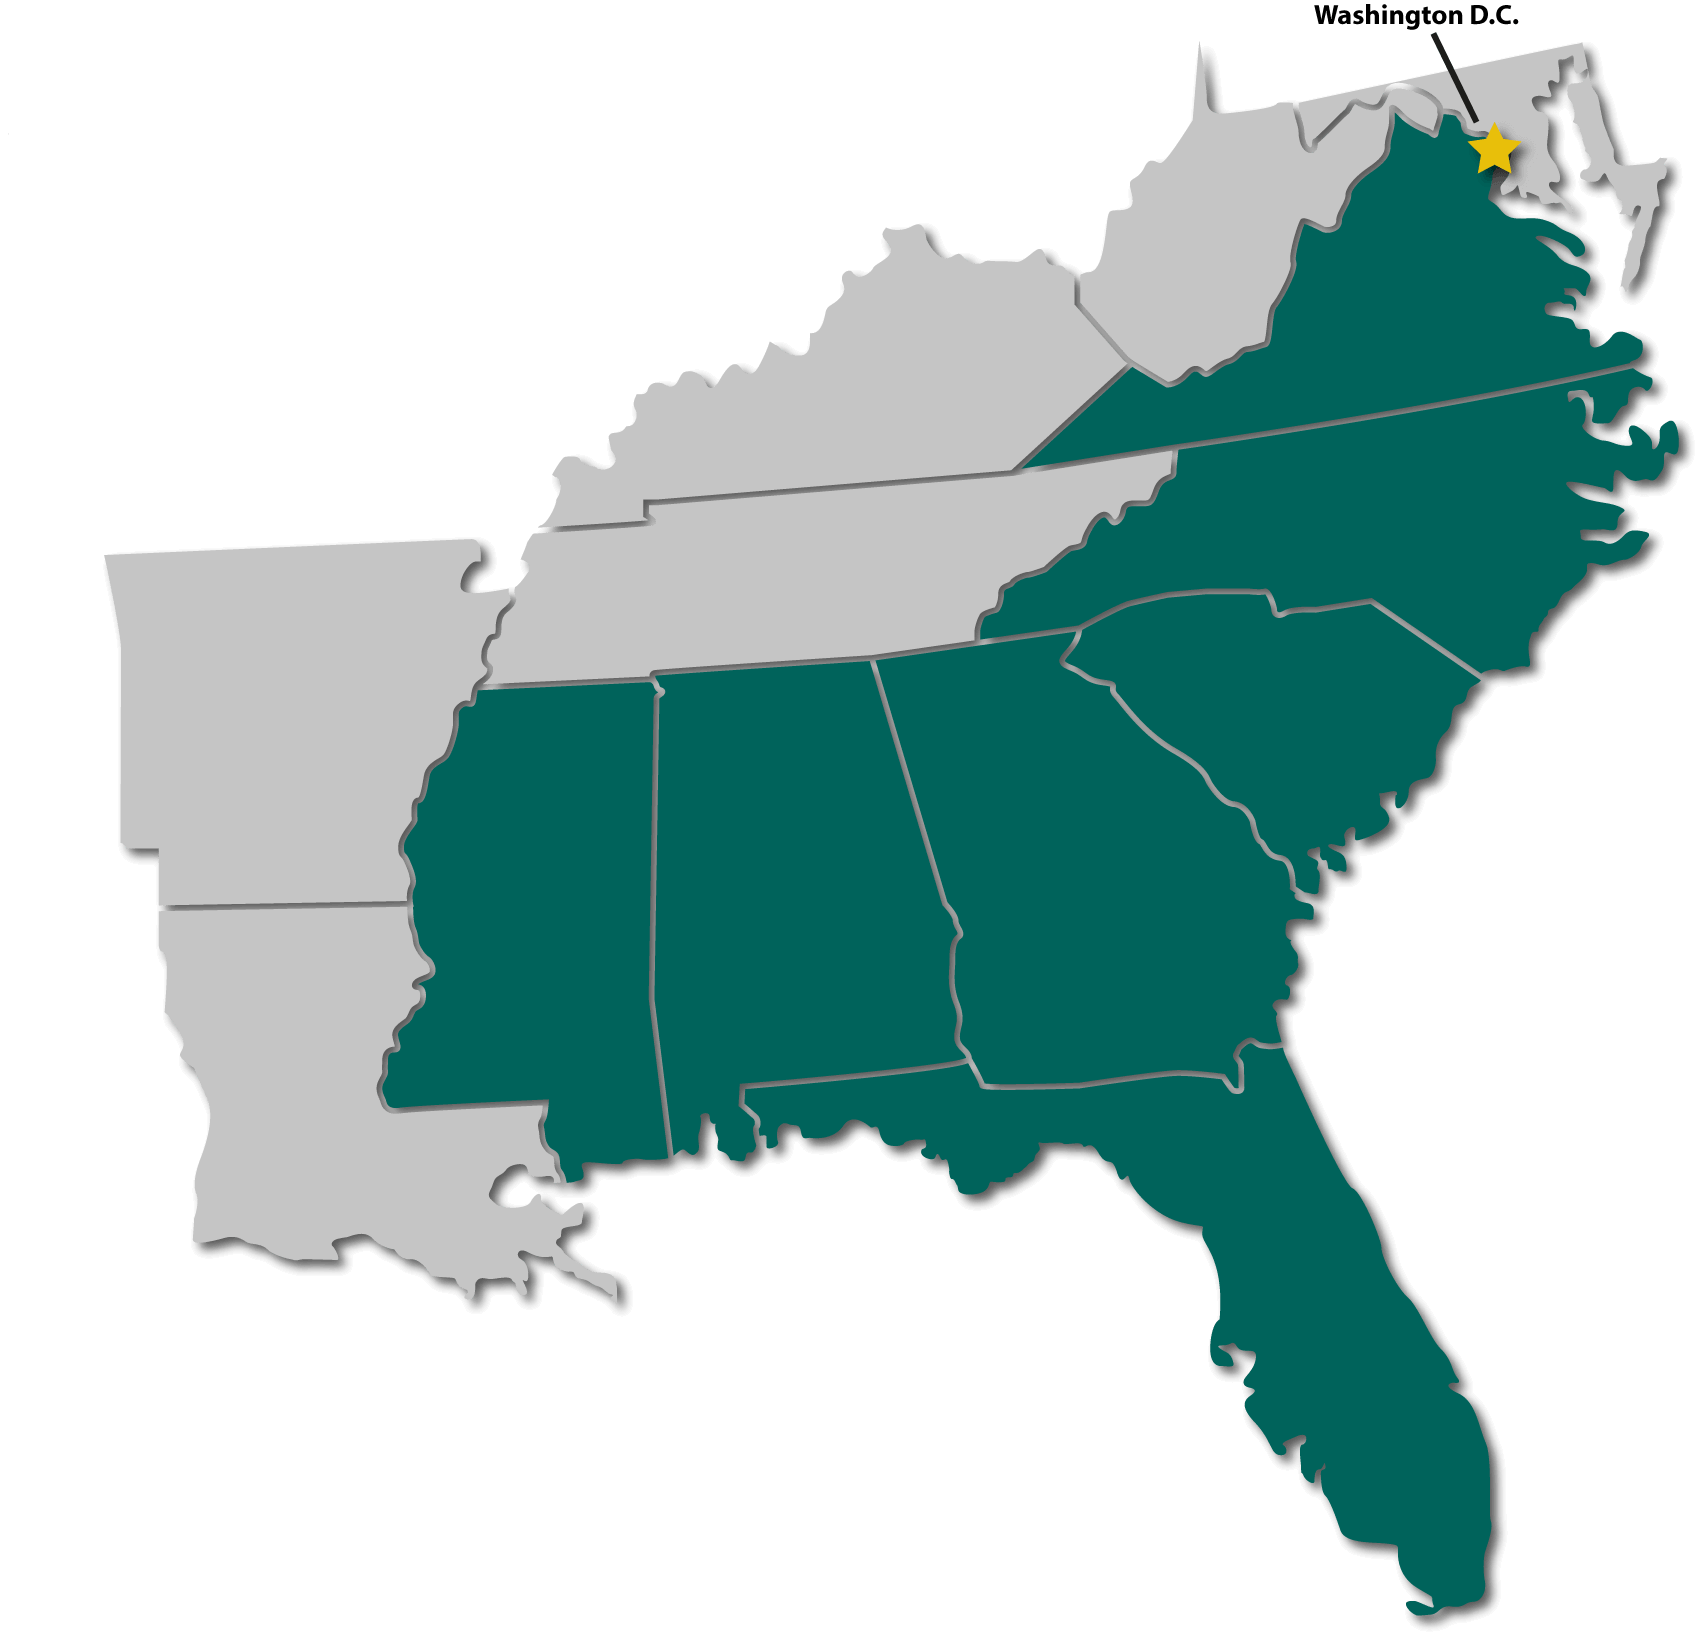 Service locations map illustration with Virginia, Washington D.C., North Carolina, South Carolina, Georgia, Mississippi, Alabama, and Florida highlighted as the service locations.